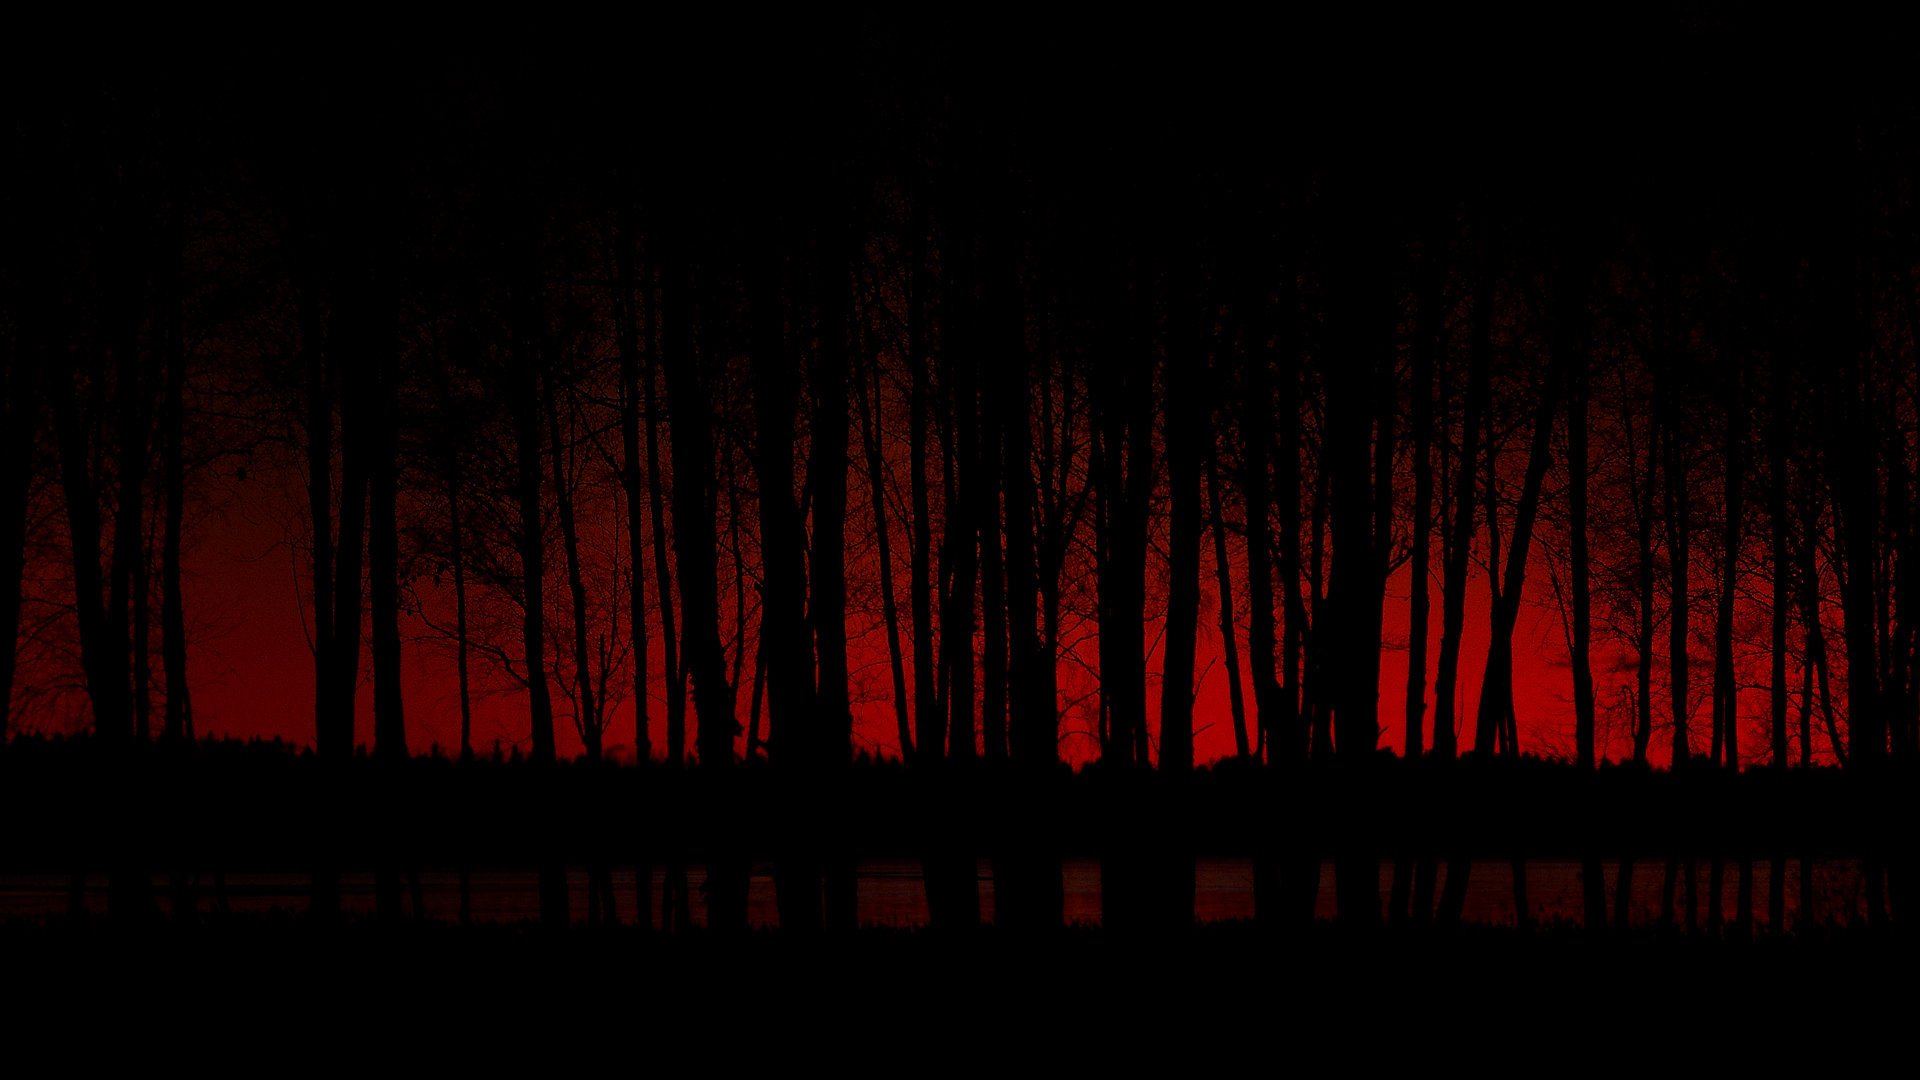 Dark forest wallpapers 1920x1080 Full HD (1080p) desktop backgrounds